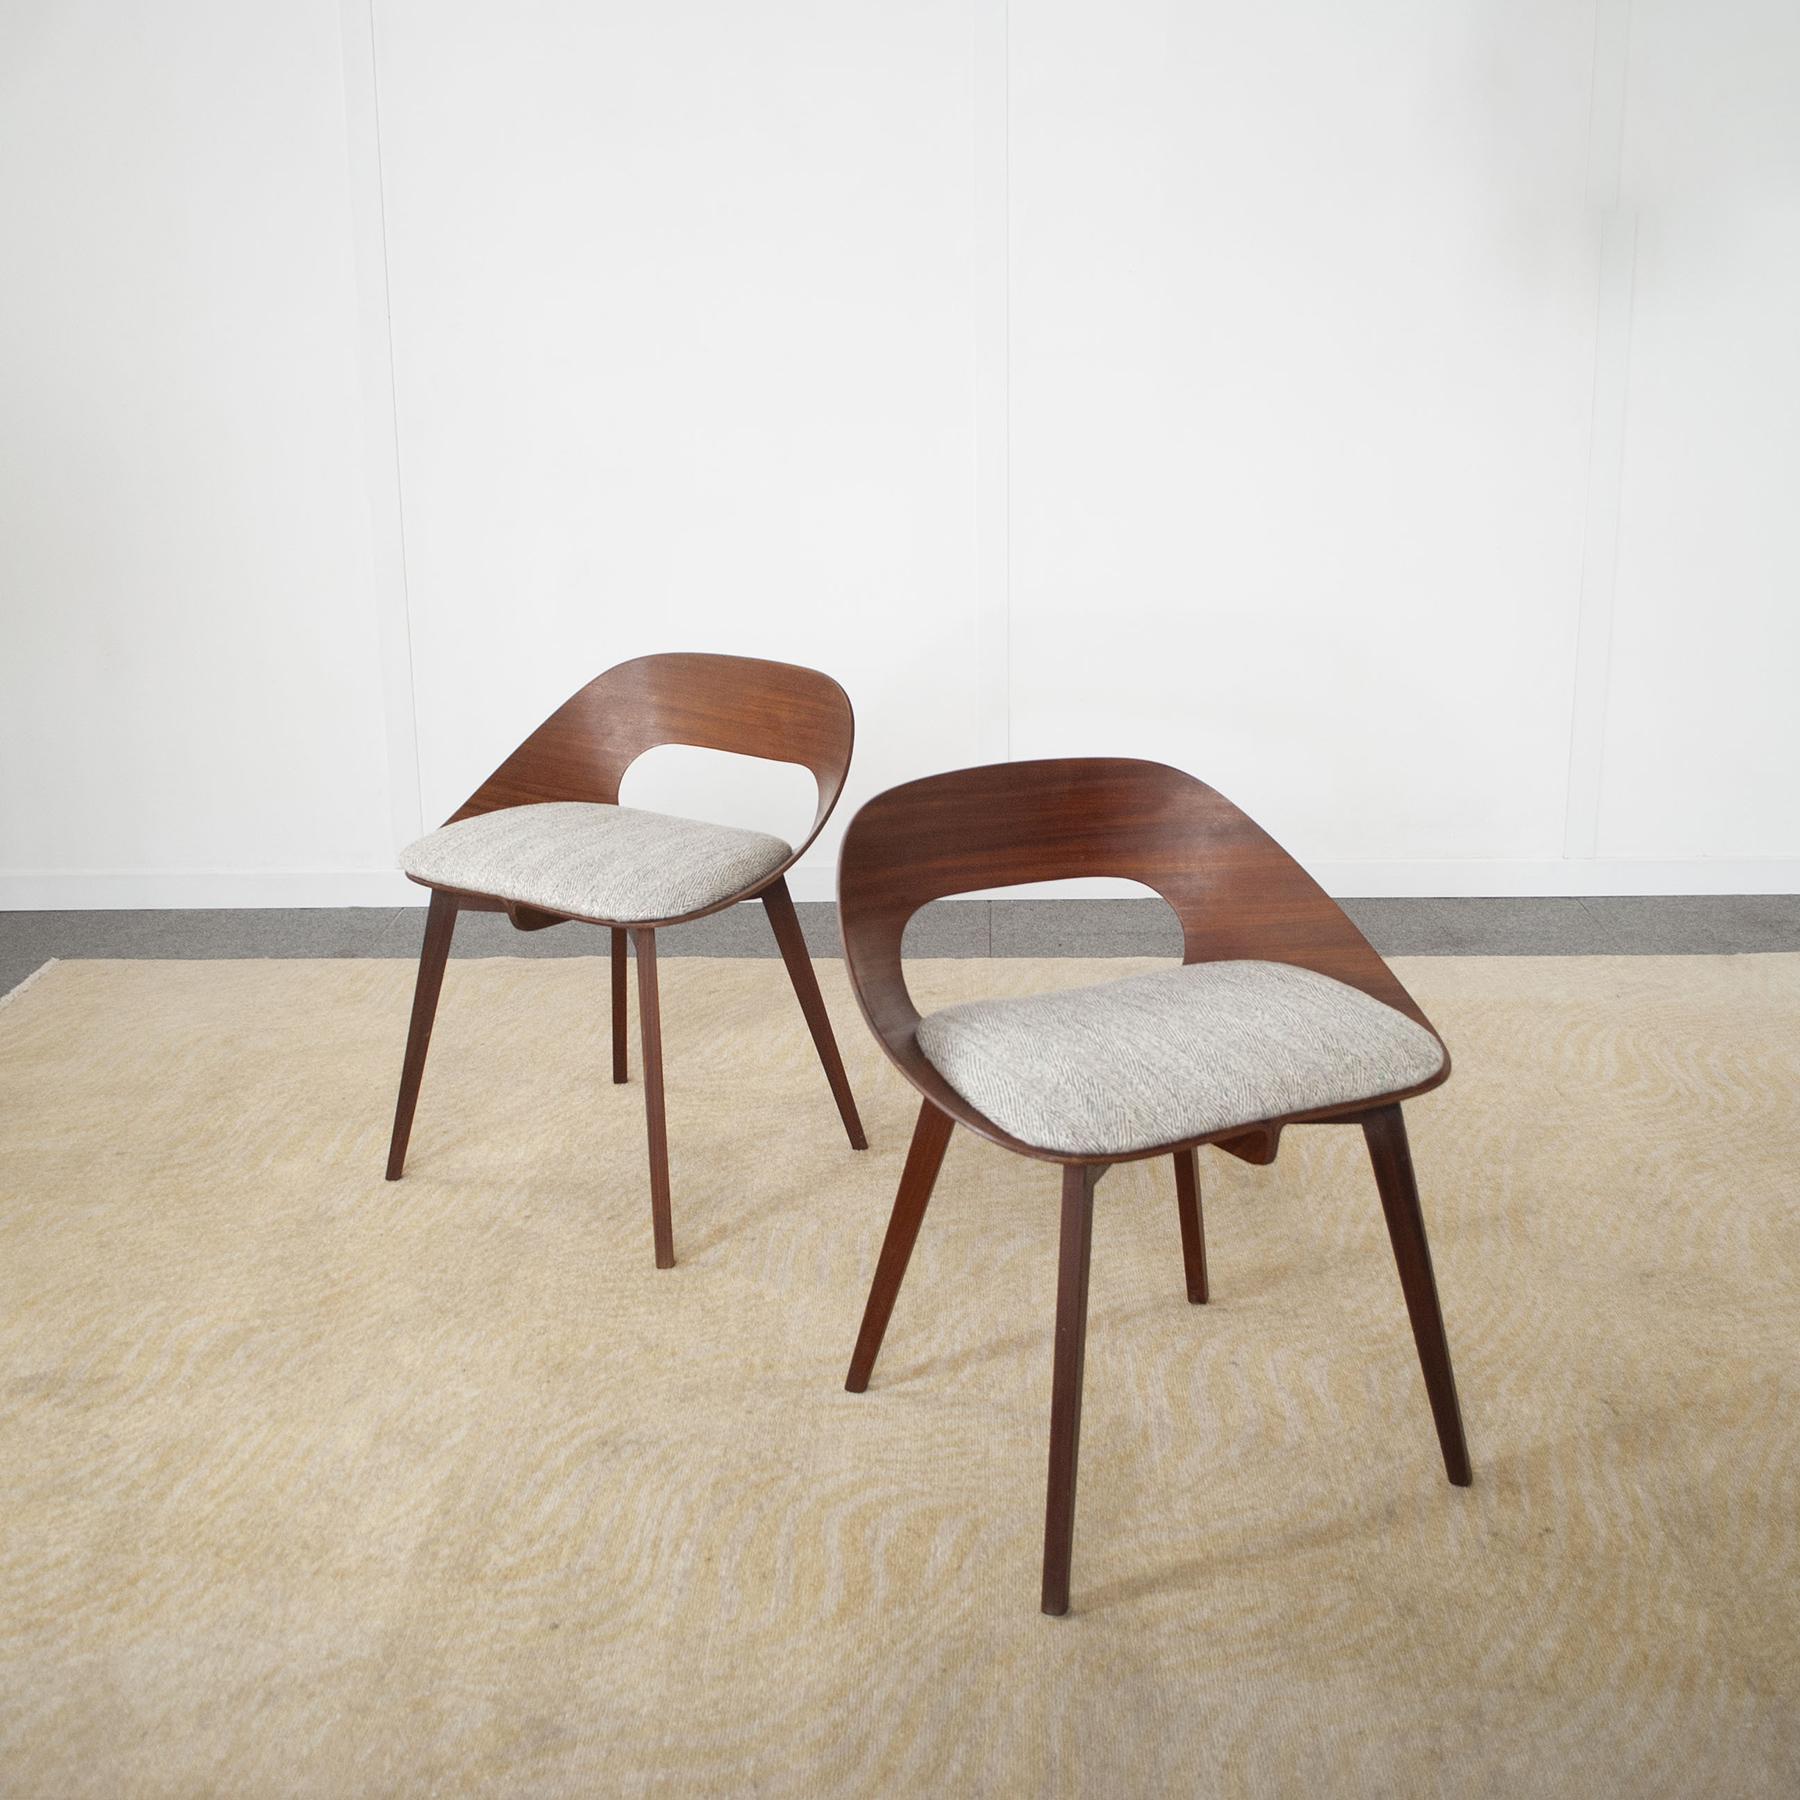 Italian Eero saarinen in the style set of two chairs mid fifties